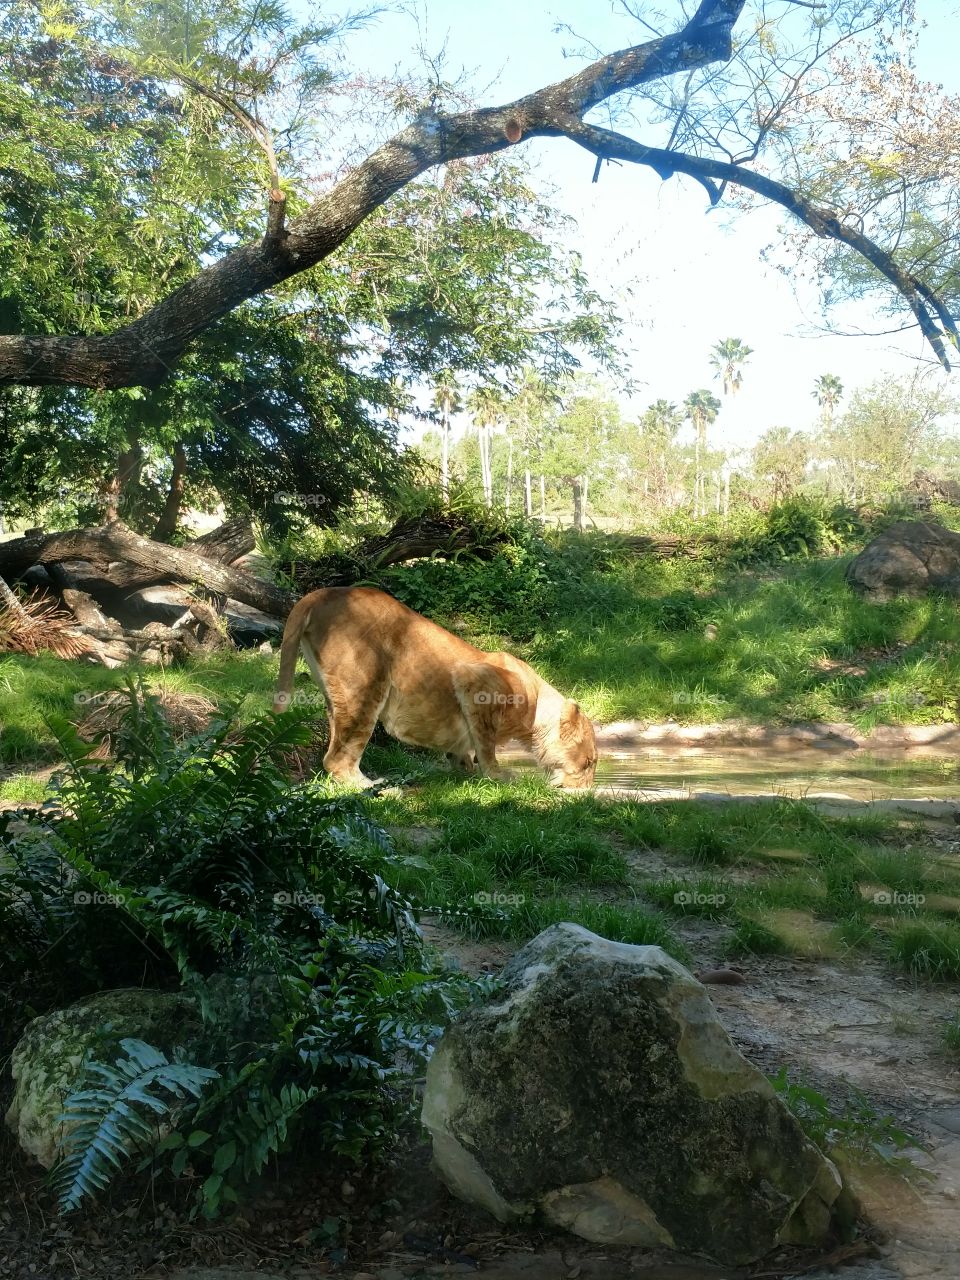 una leona refrescando se tomando un poco de agua